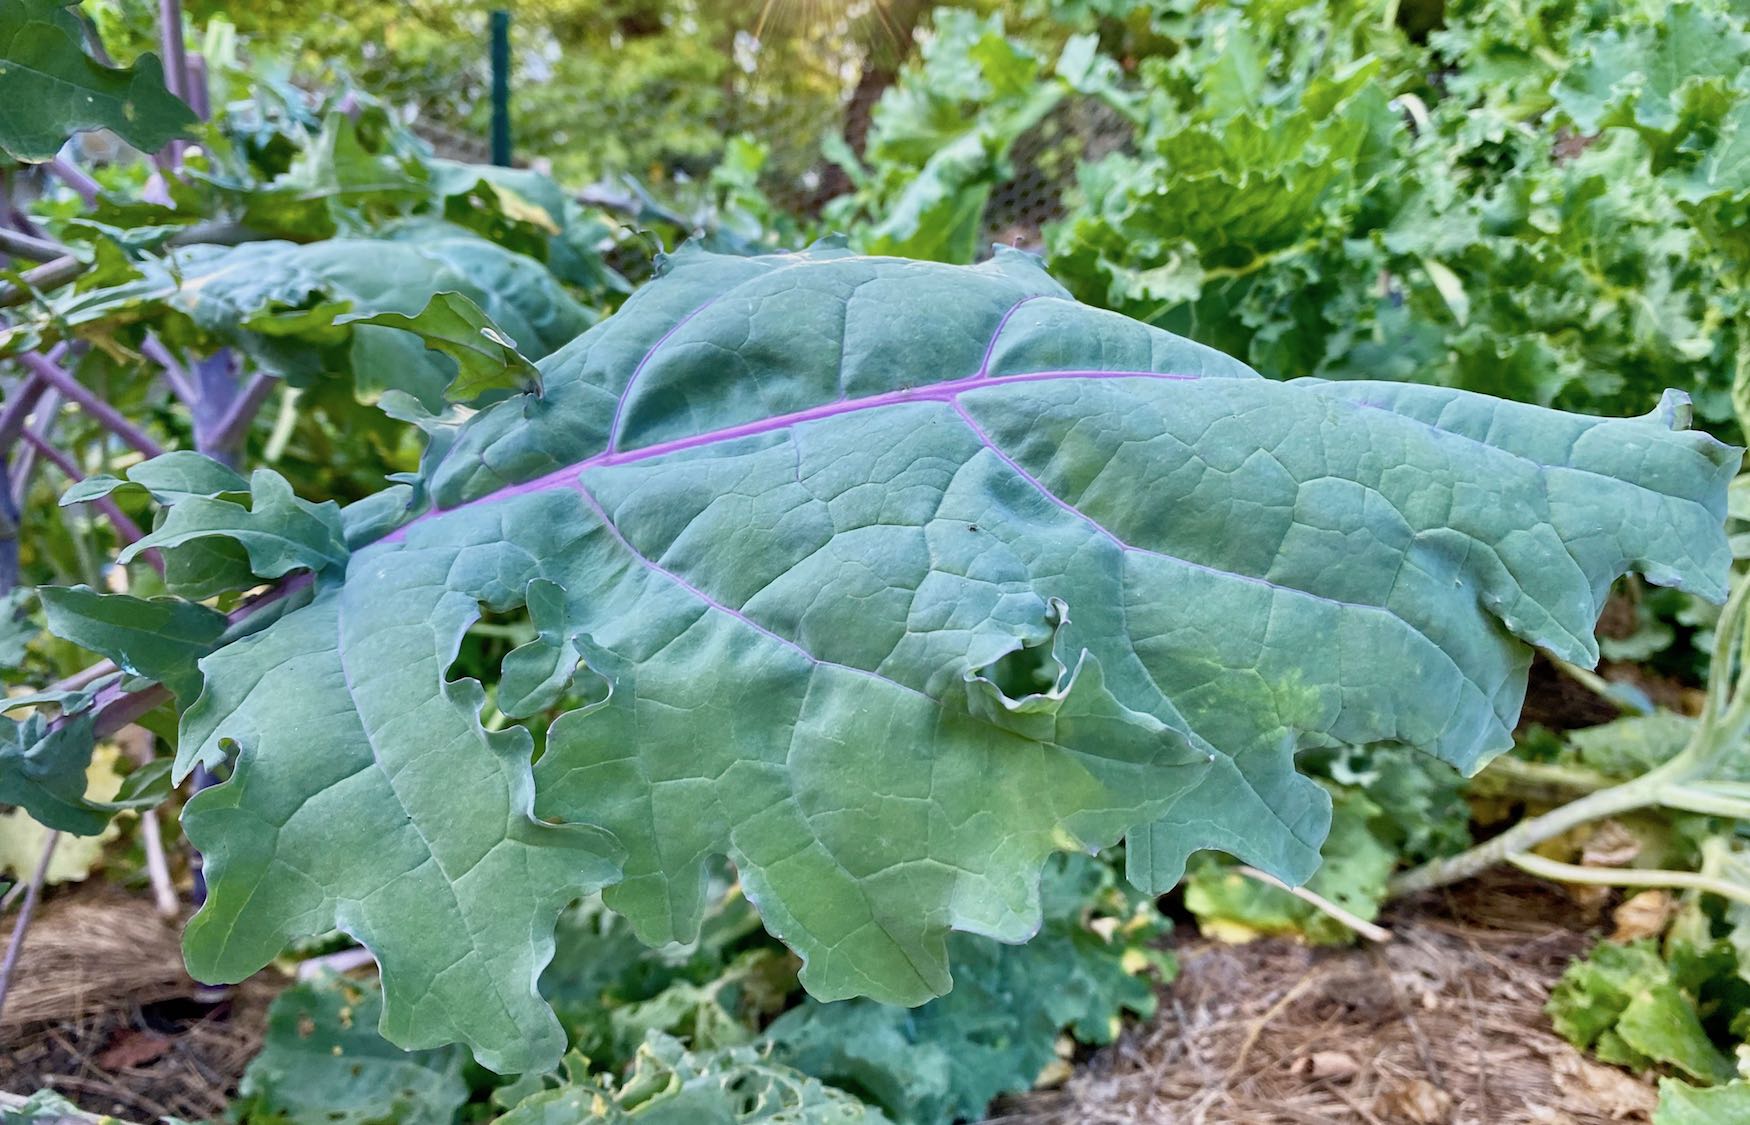 It's the weekend! Number 265, Kale in My Garden